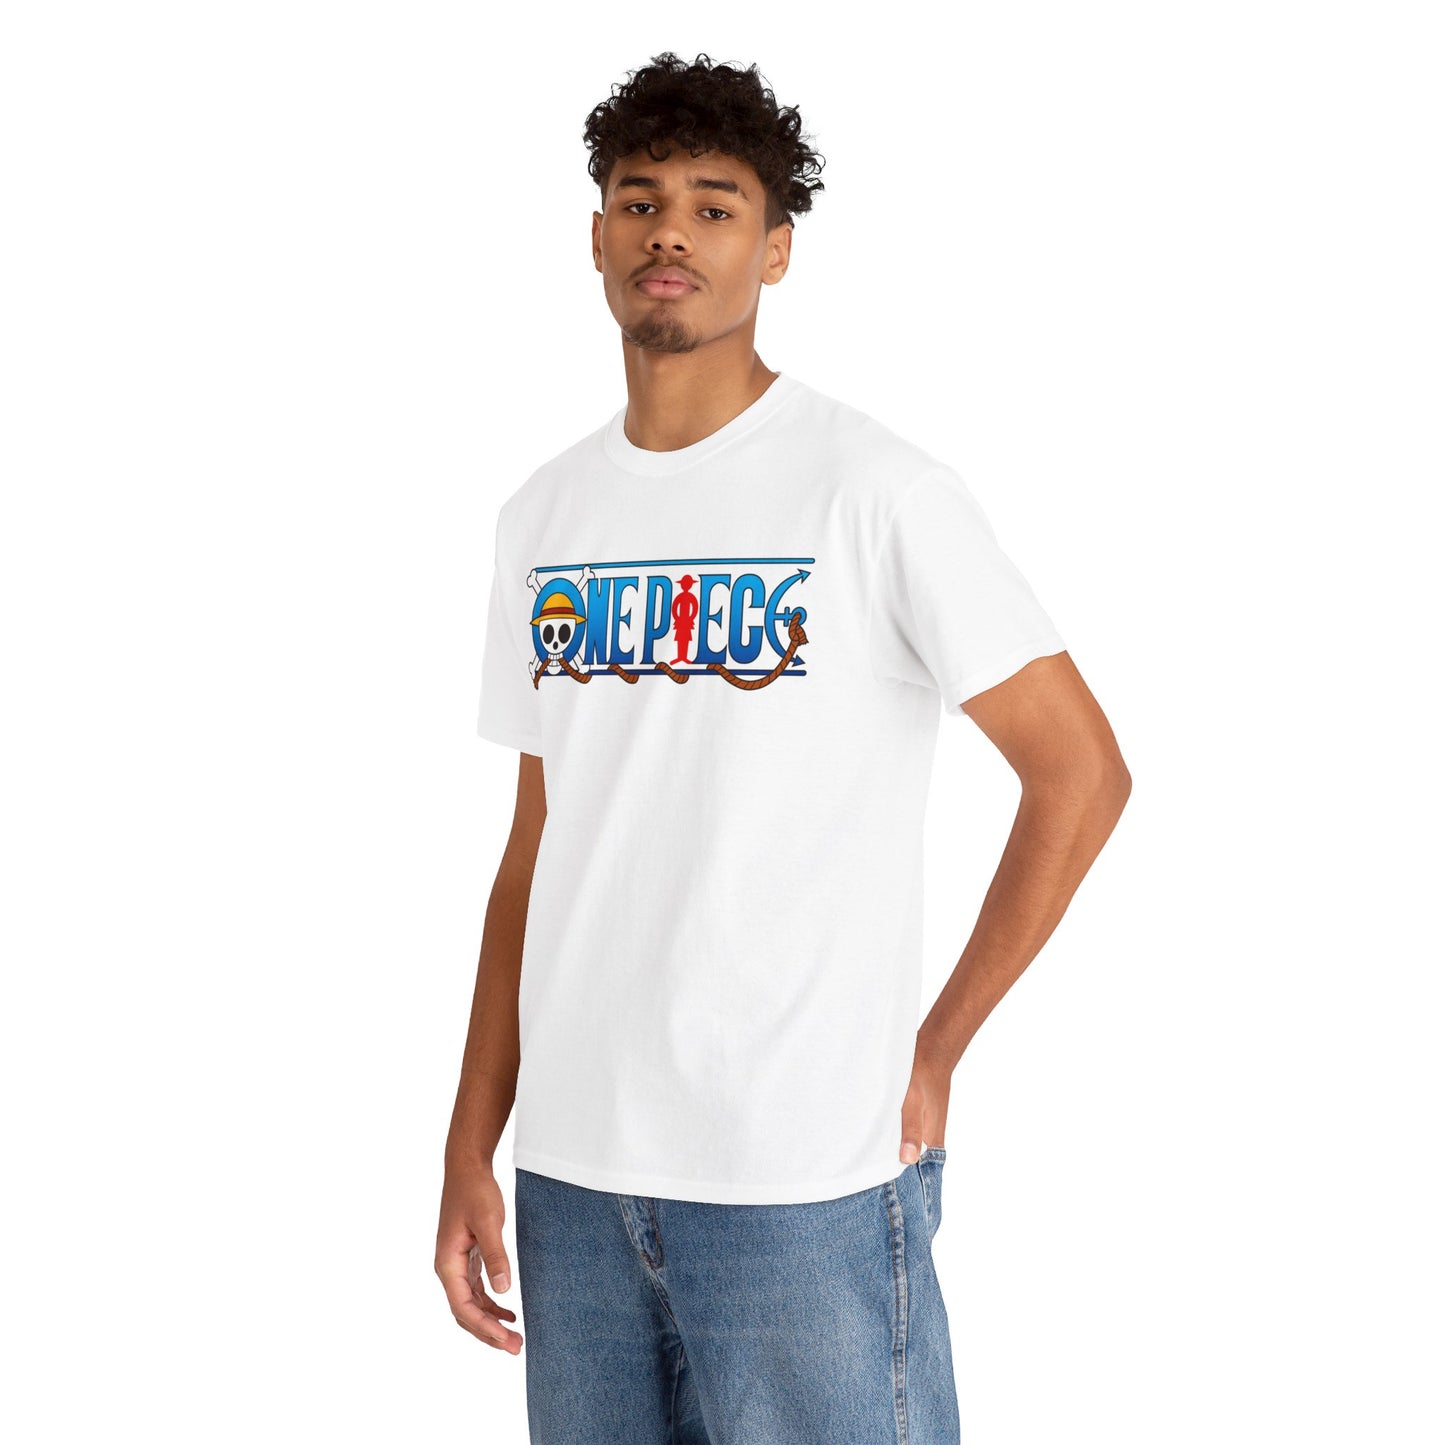 One Piece Anime T-Shirt